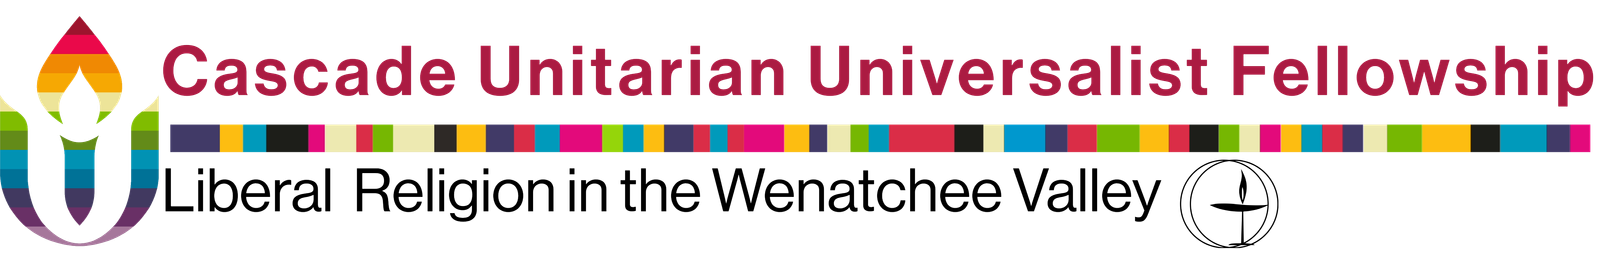 Cascade Unitarian Universalist Fellowship Logo